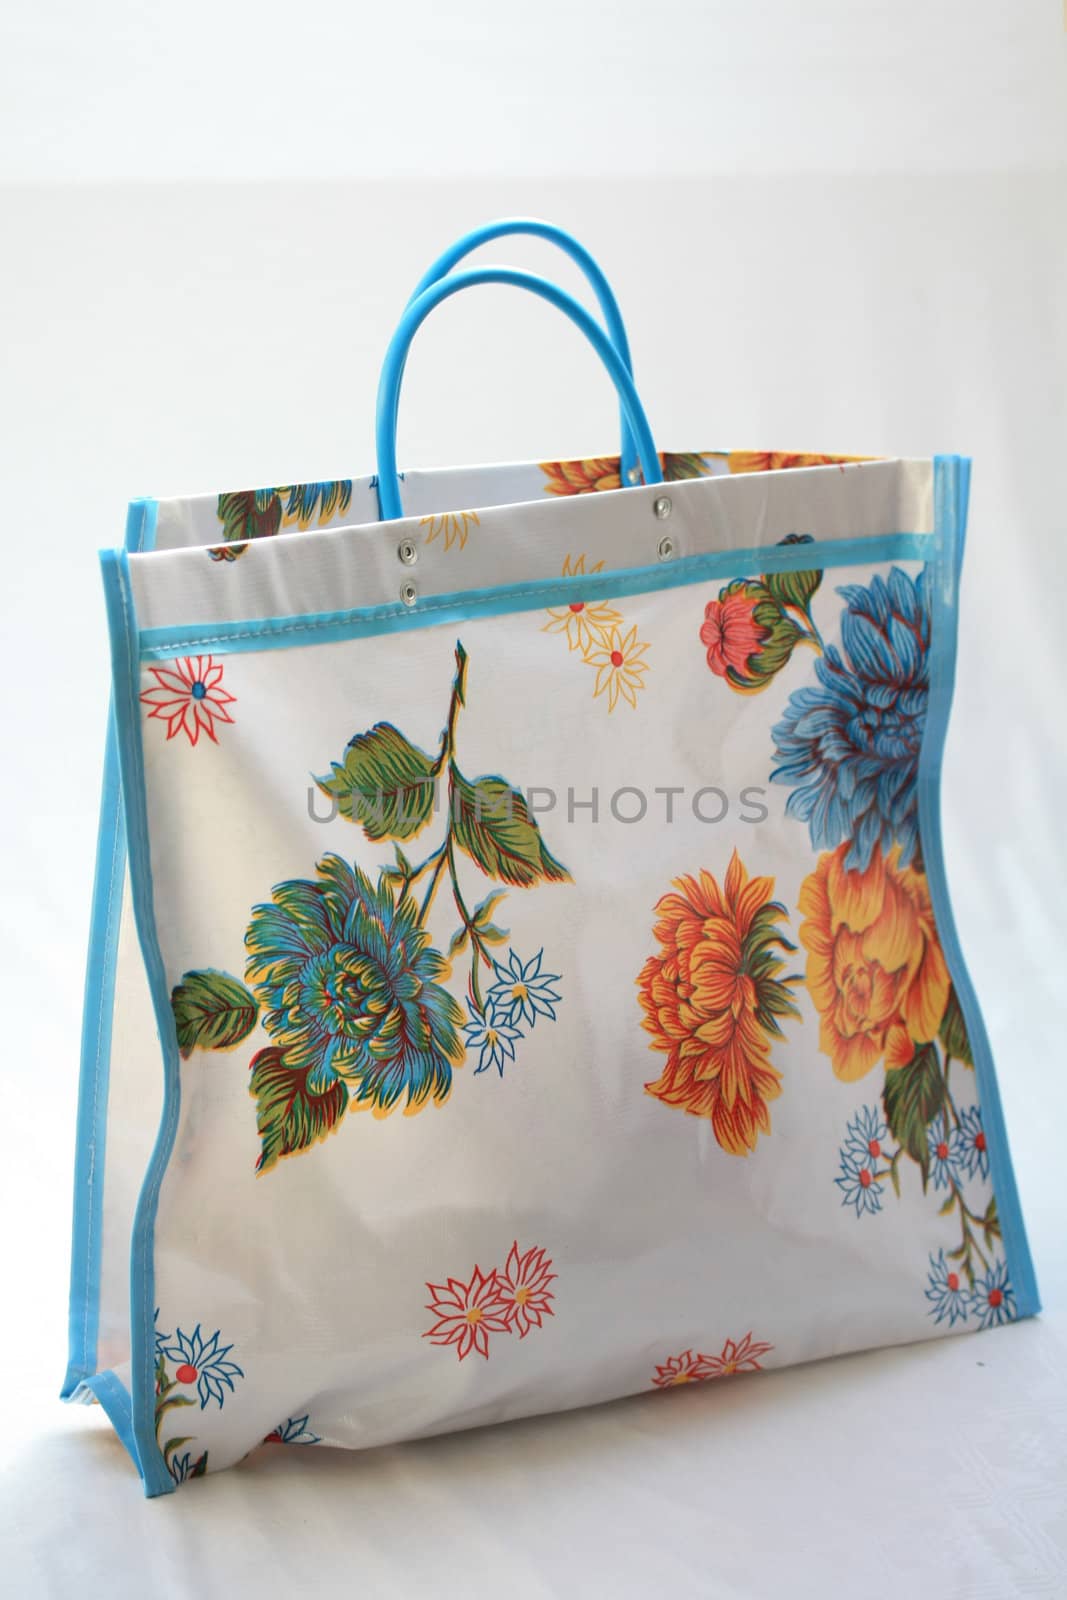 Shopping bag by studioportosabbia